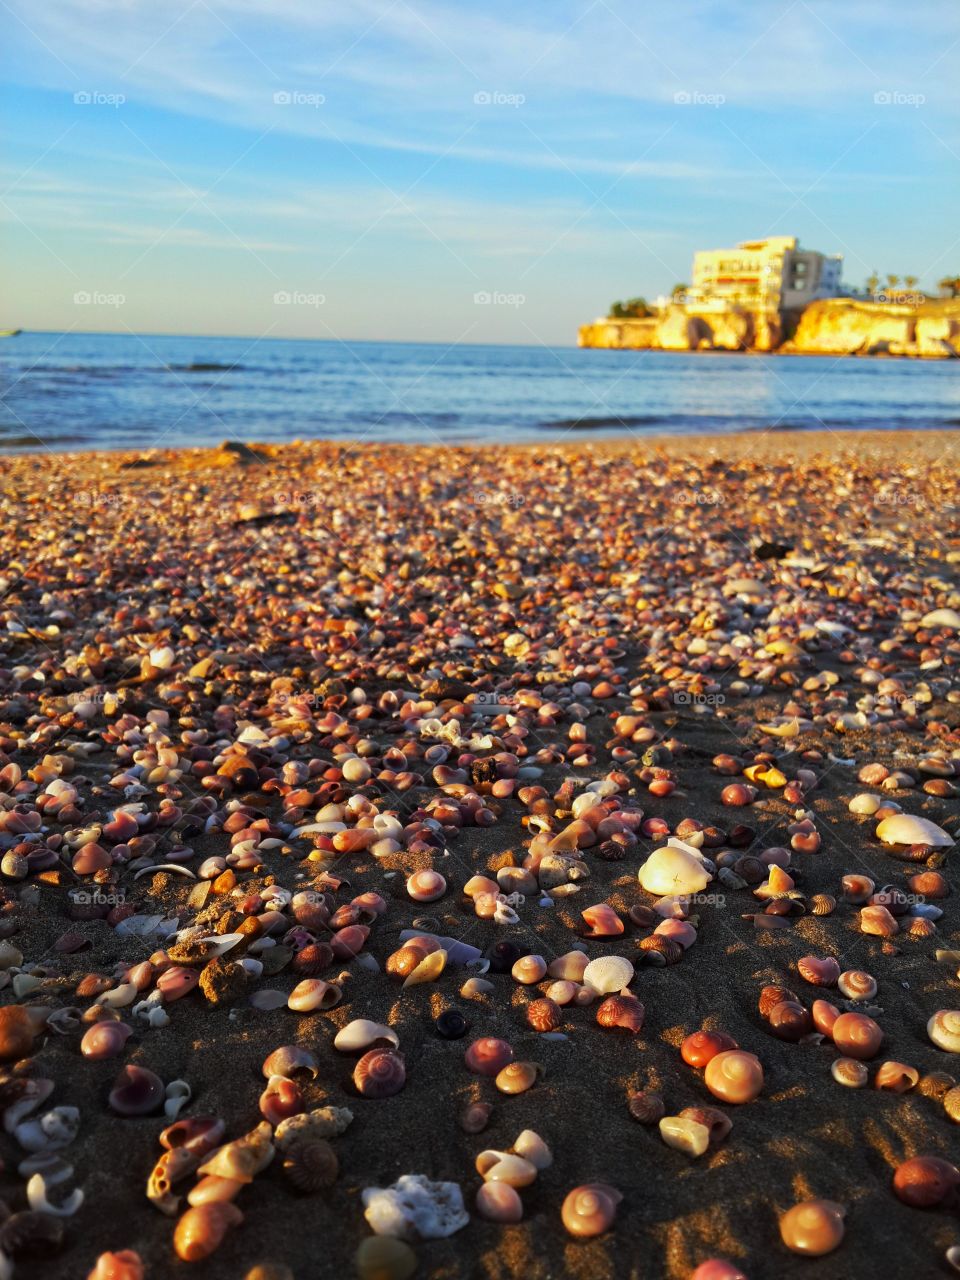 Scenics view of seashell on beach